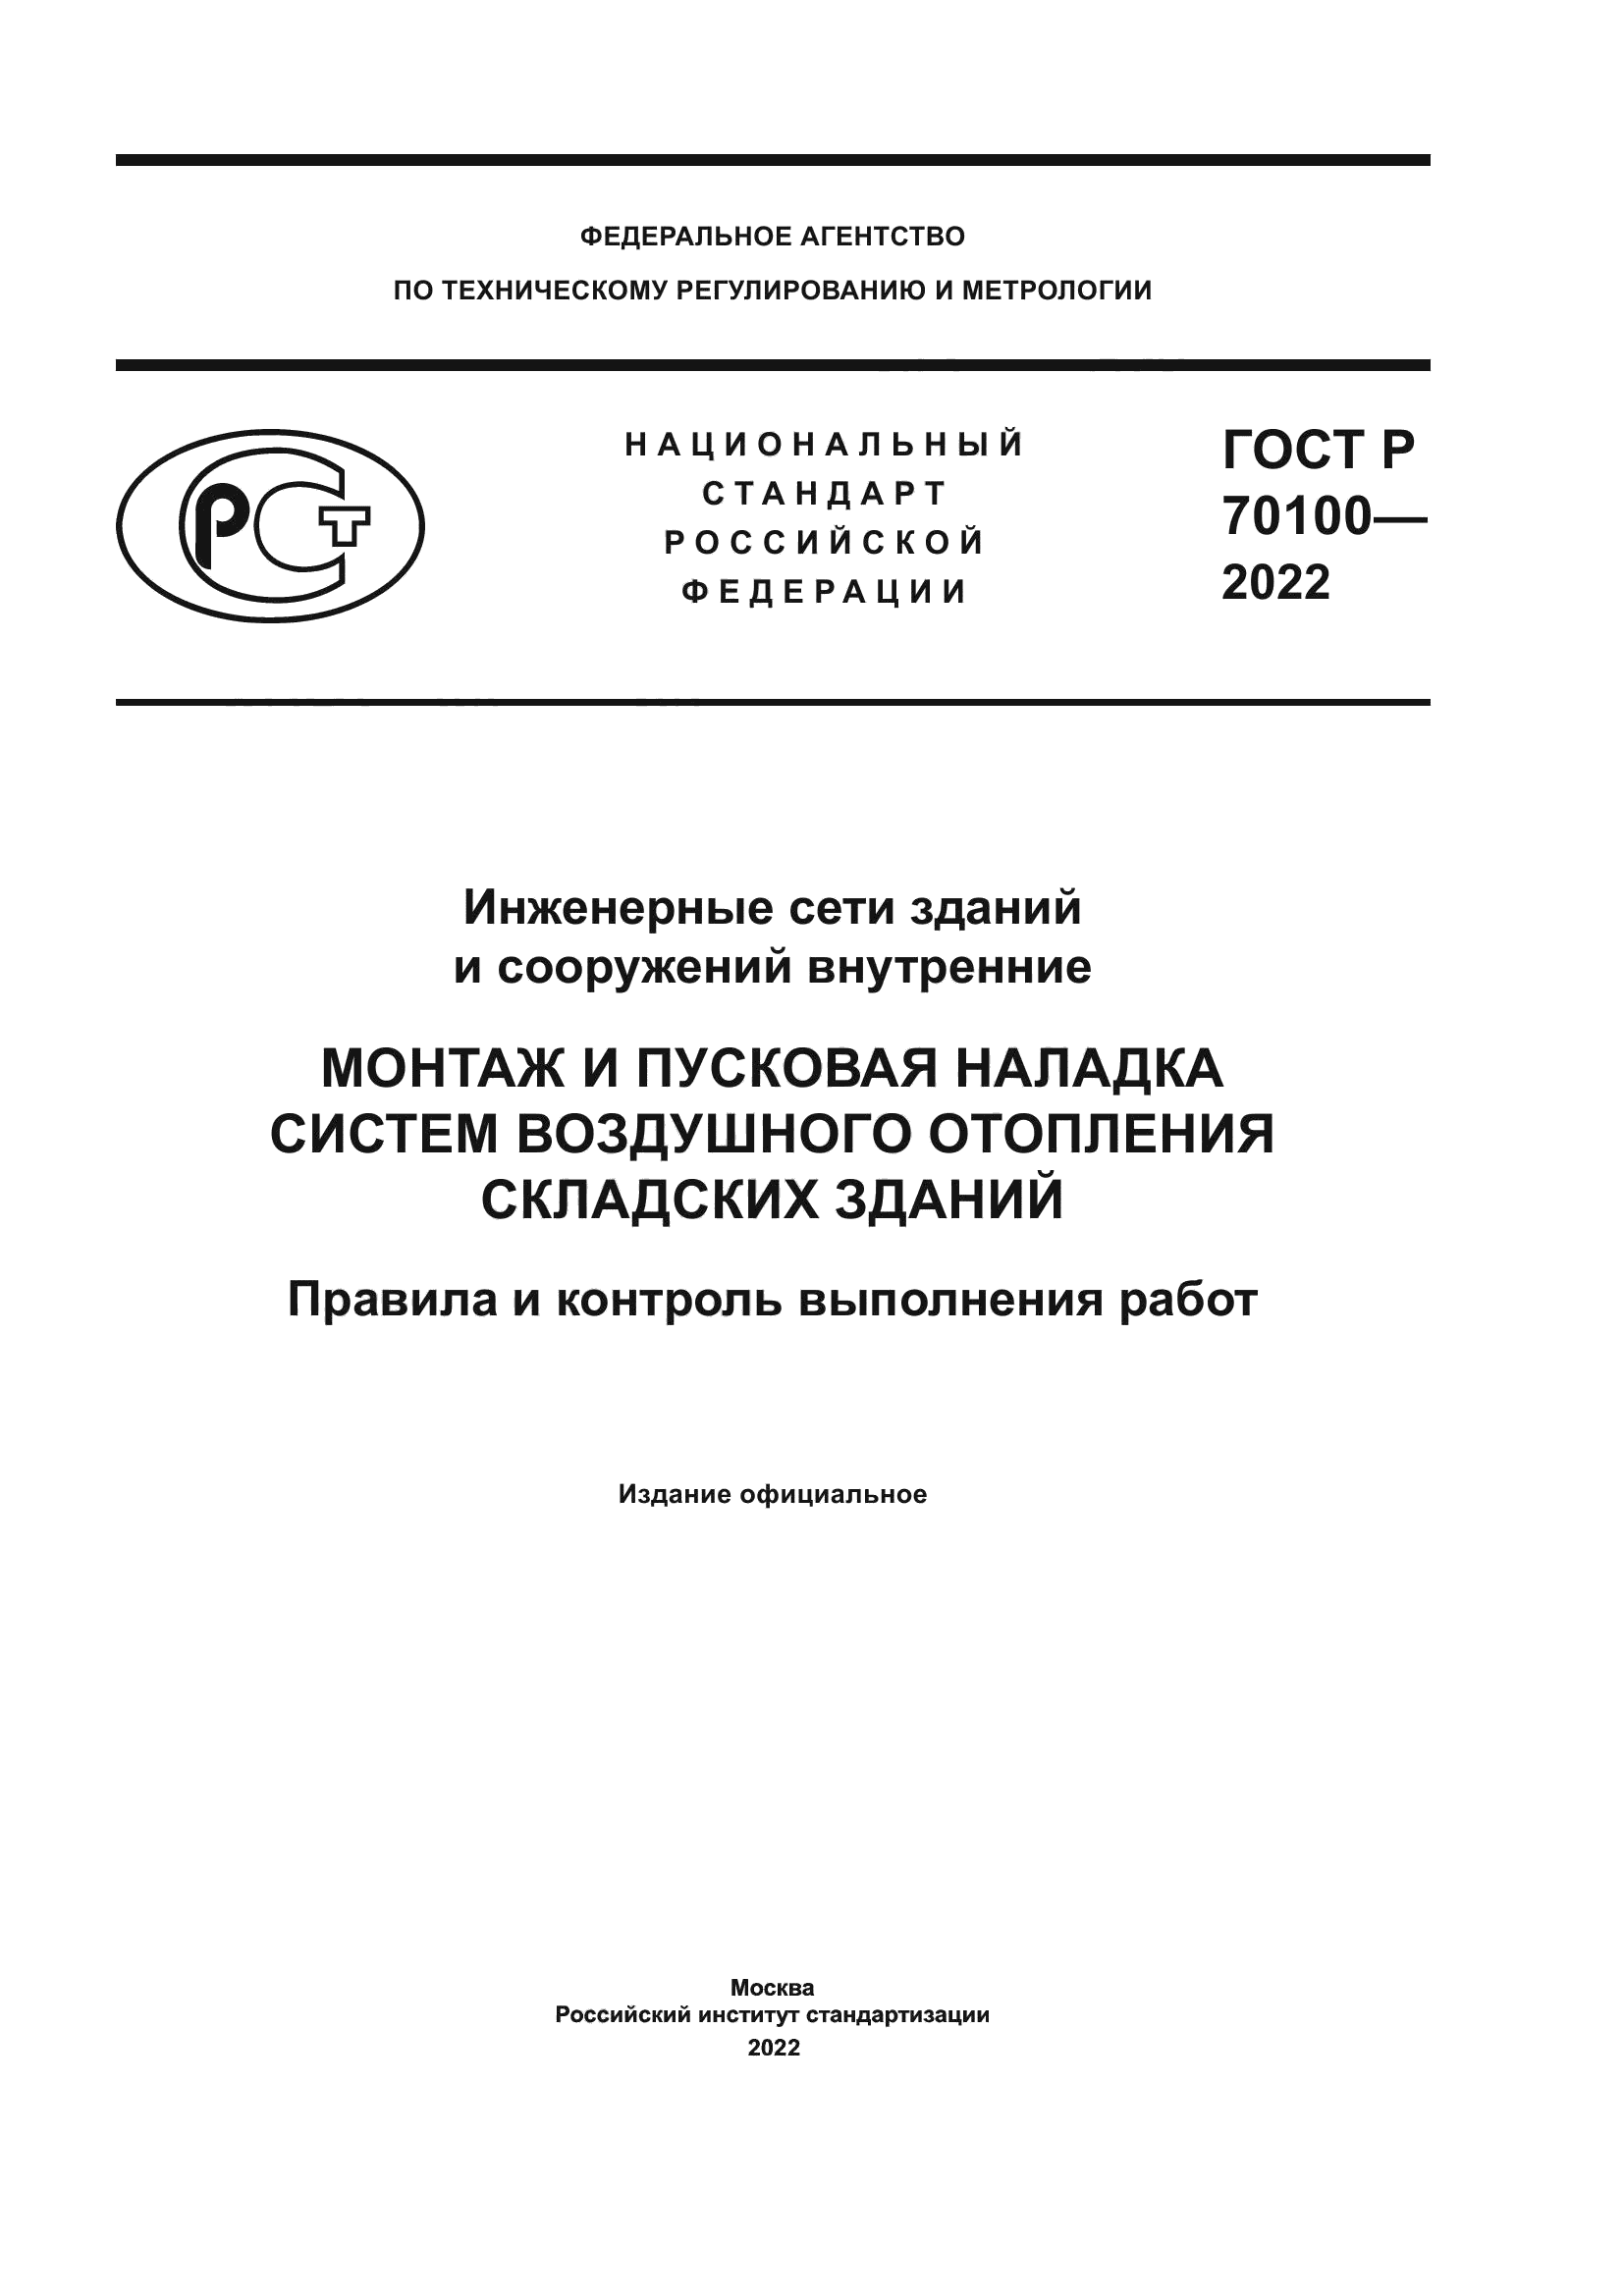 ГОСТ Р 70100-2022